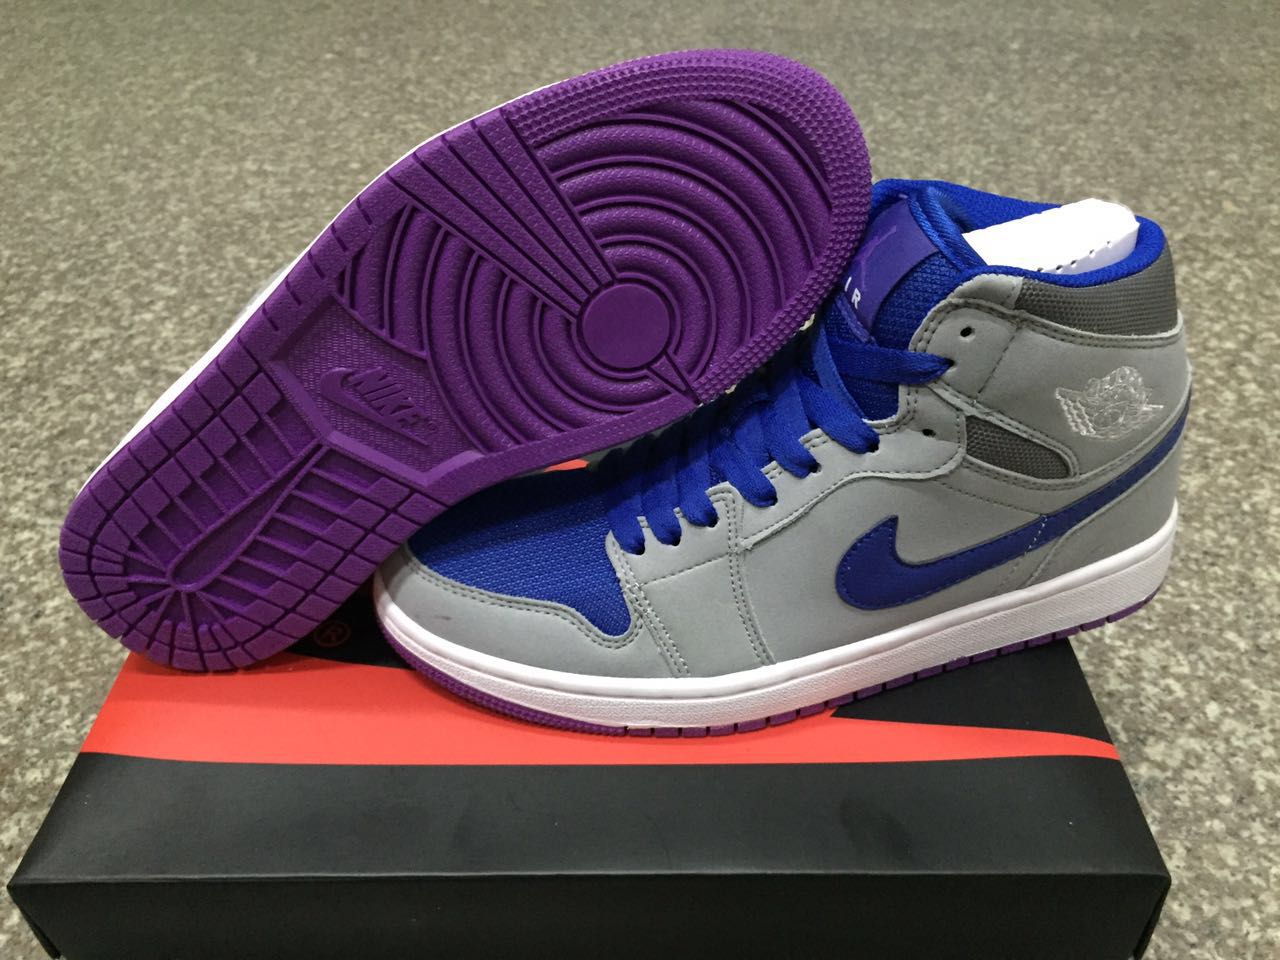 New Original Air Jordan 1 Grey Blue Purple Shoes